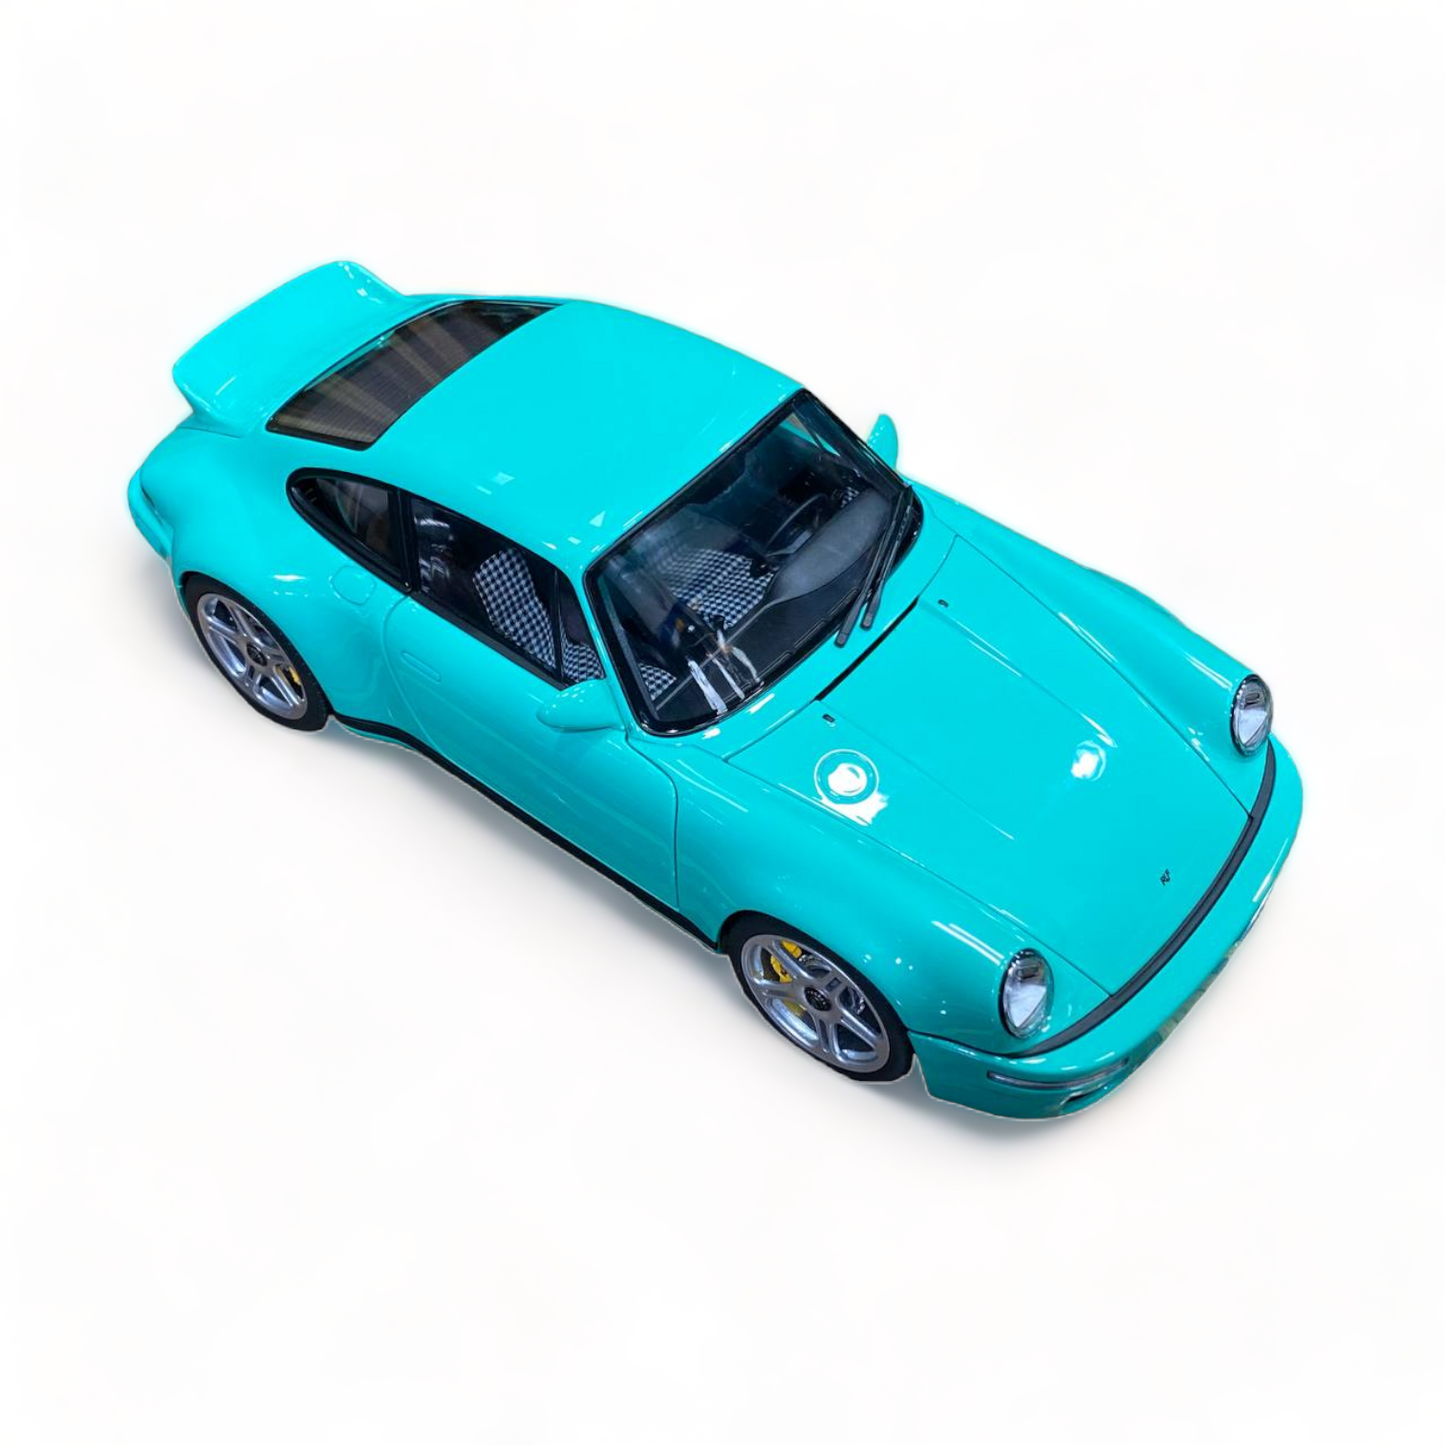 1/18 diecast Porsche RUF SCR Almost Real Scale Model Car|Sold in Dturman.com Dubai UAE.